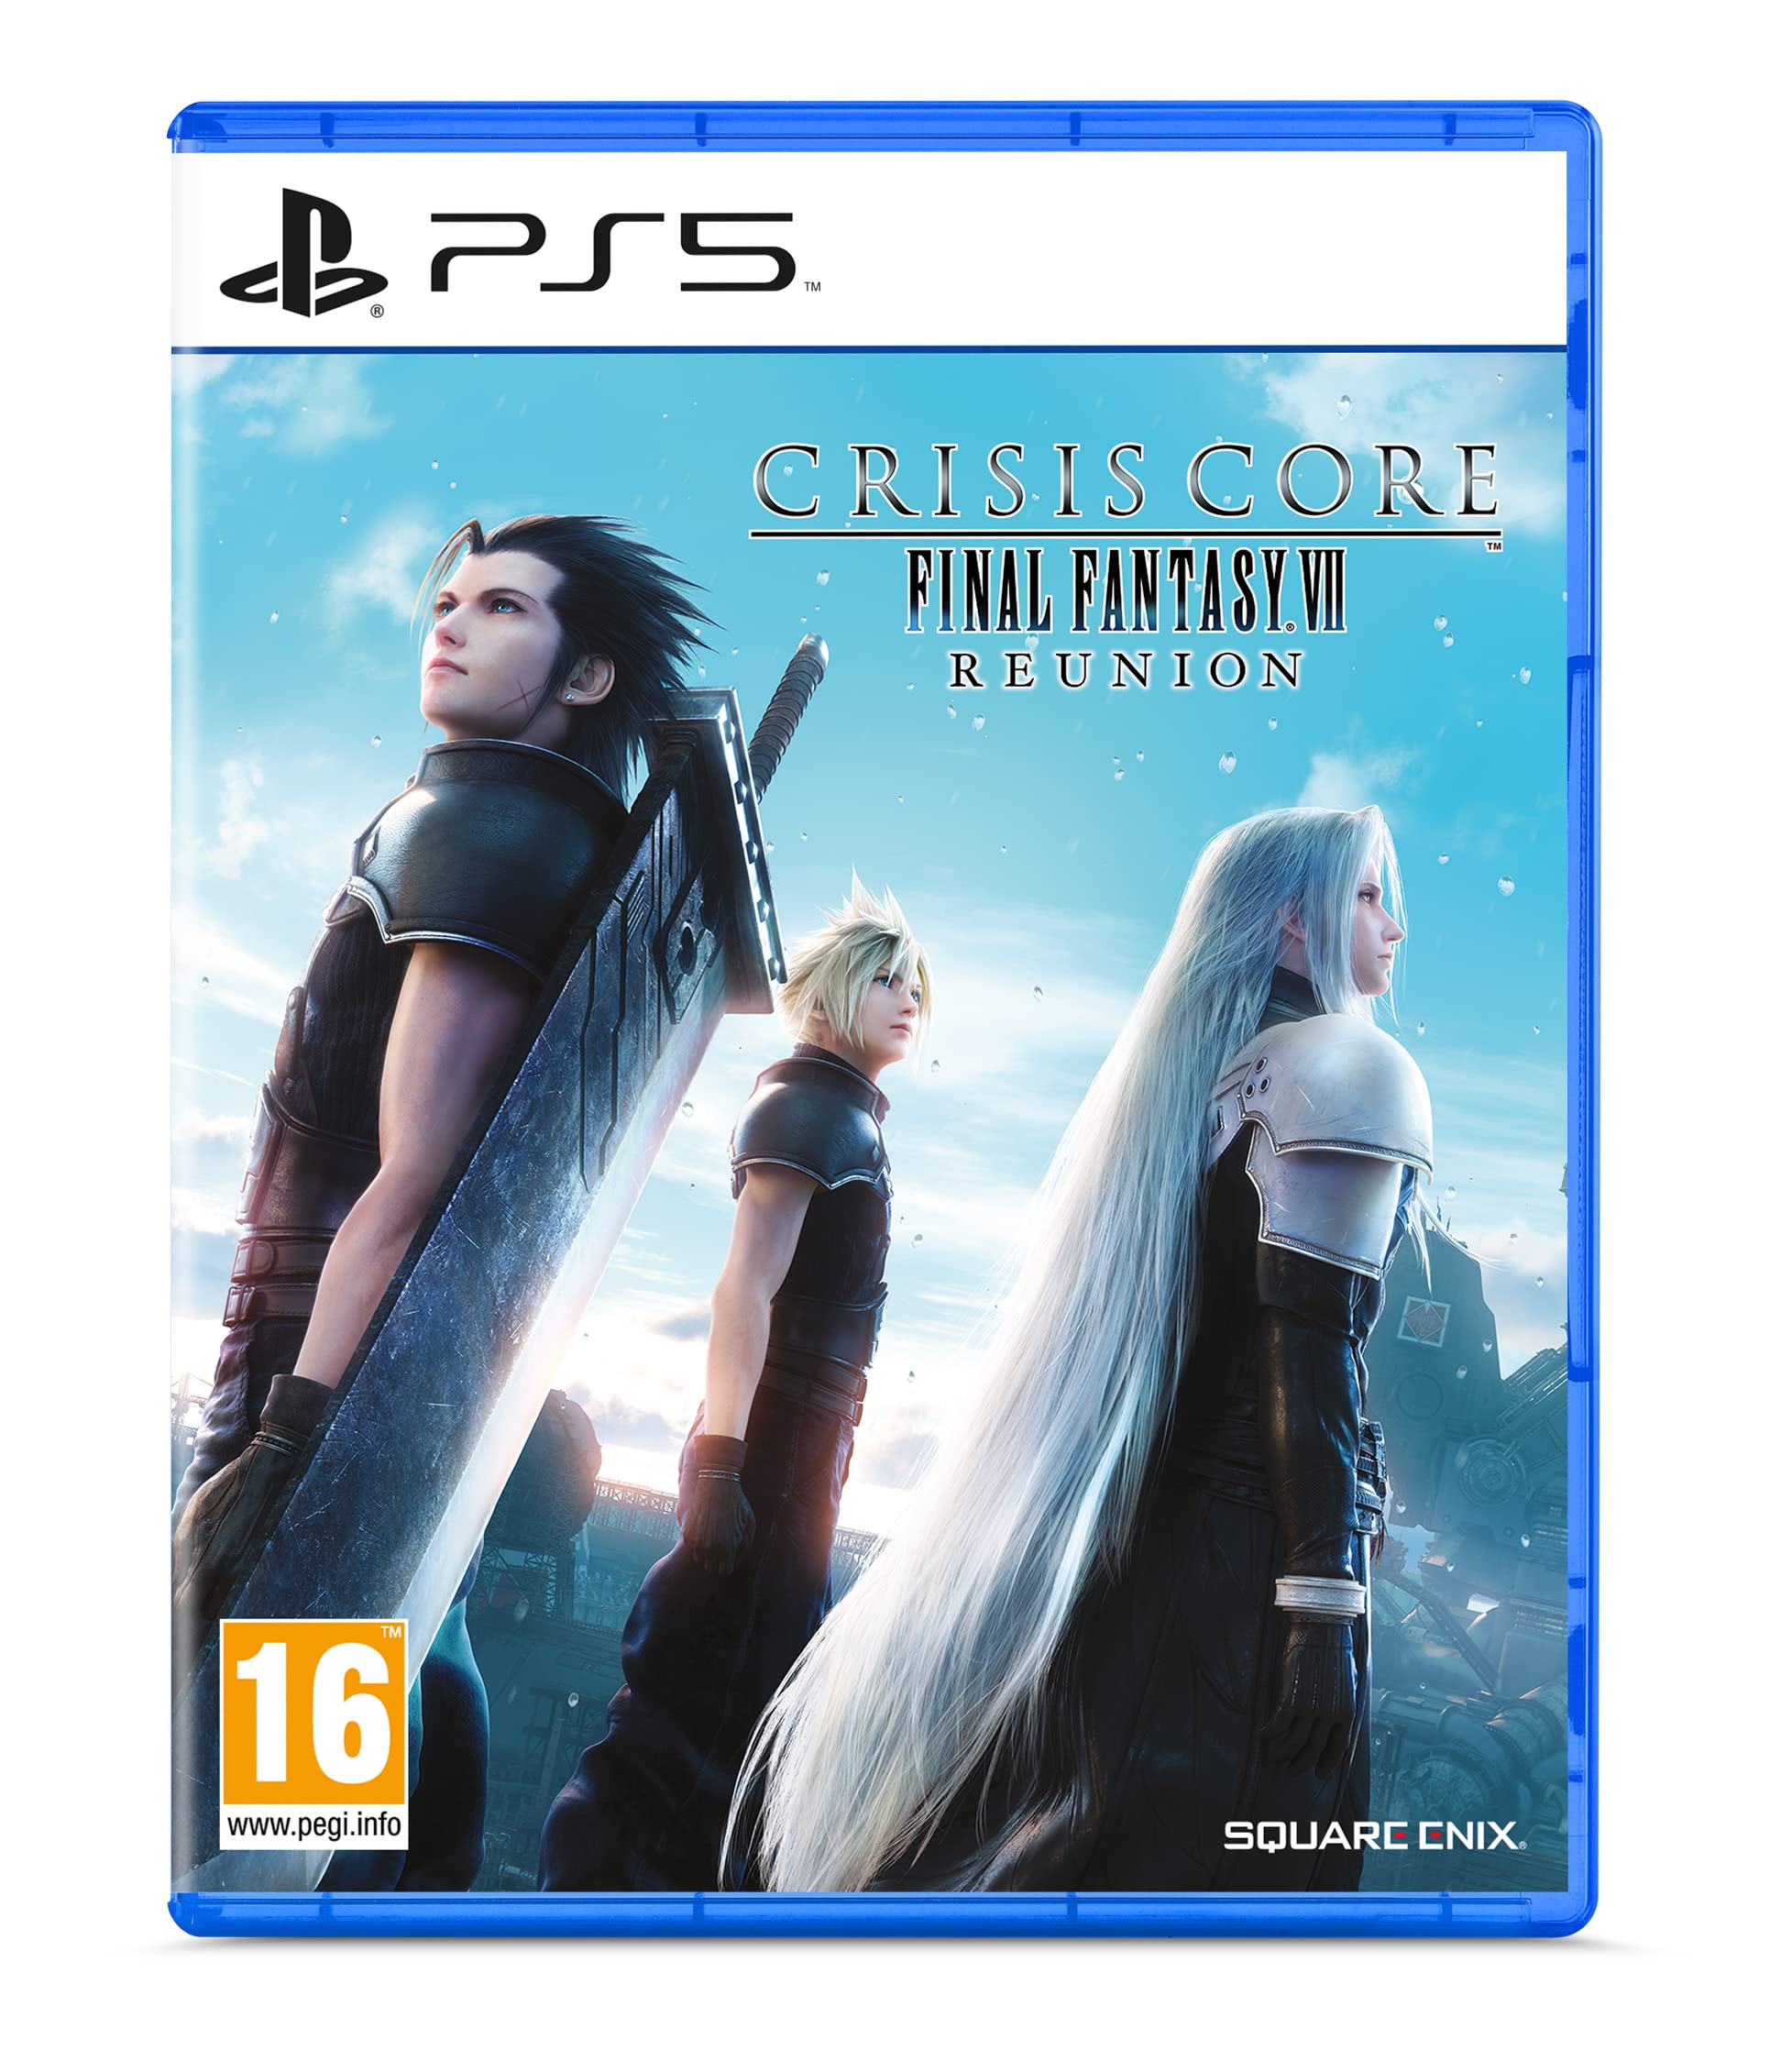 PS4 Final Fantasy VII  Sony Store Peru - Sony Store Peru